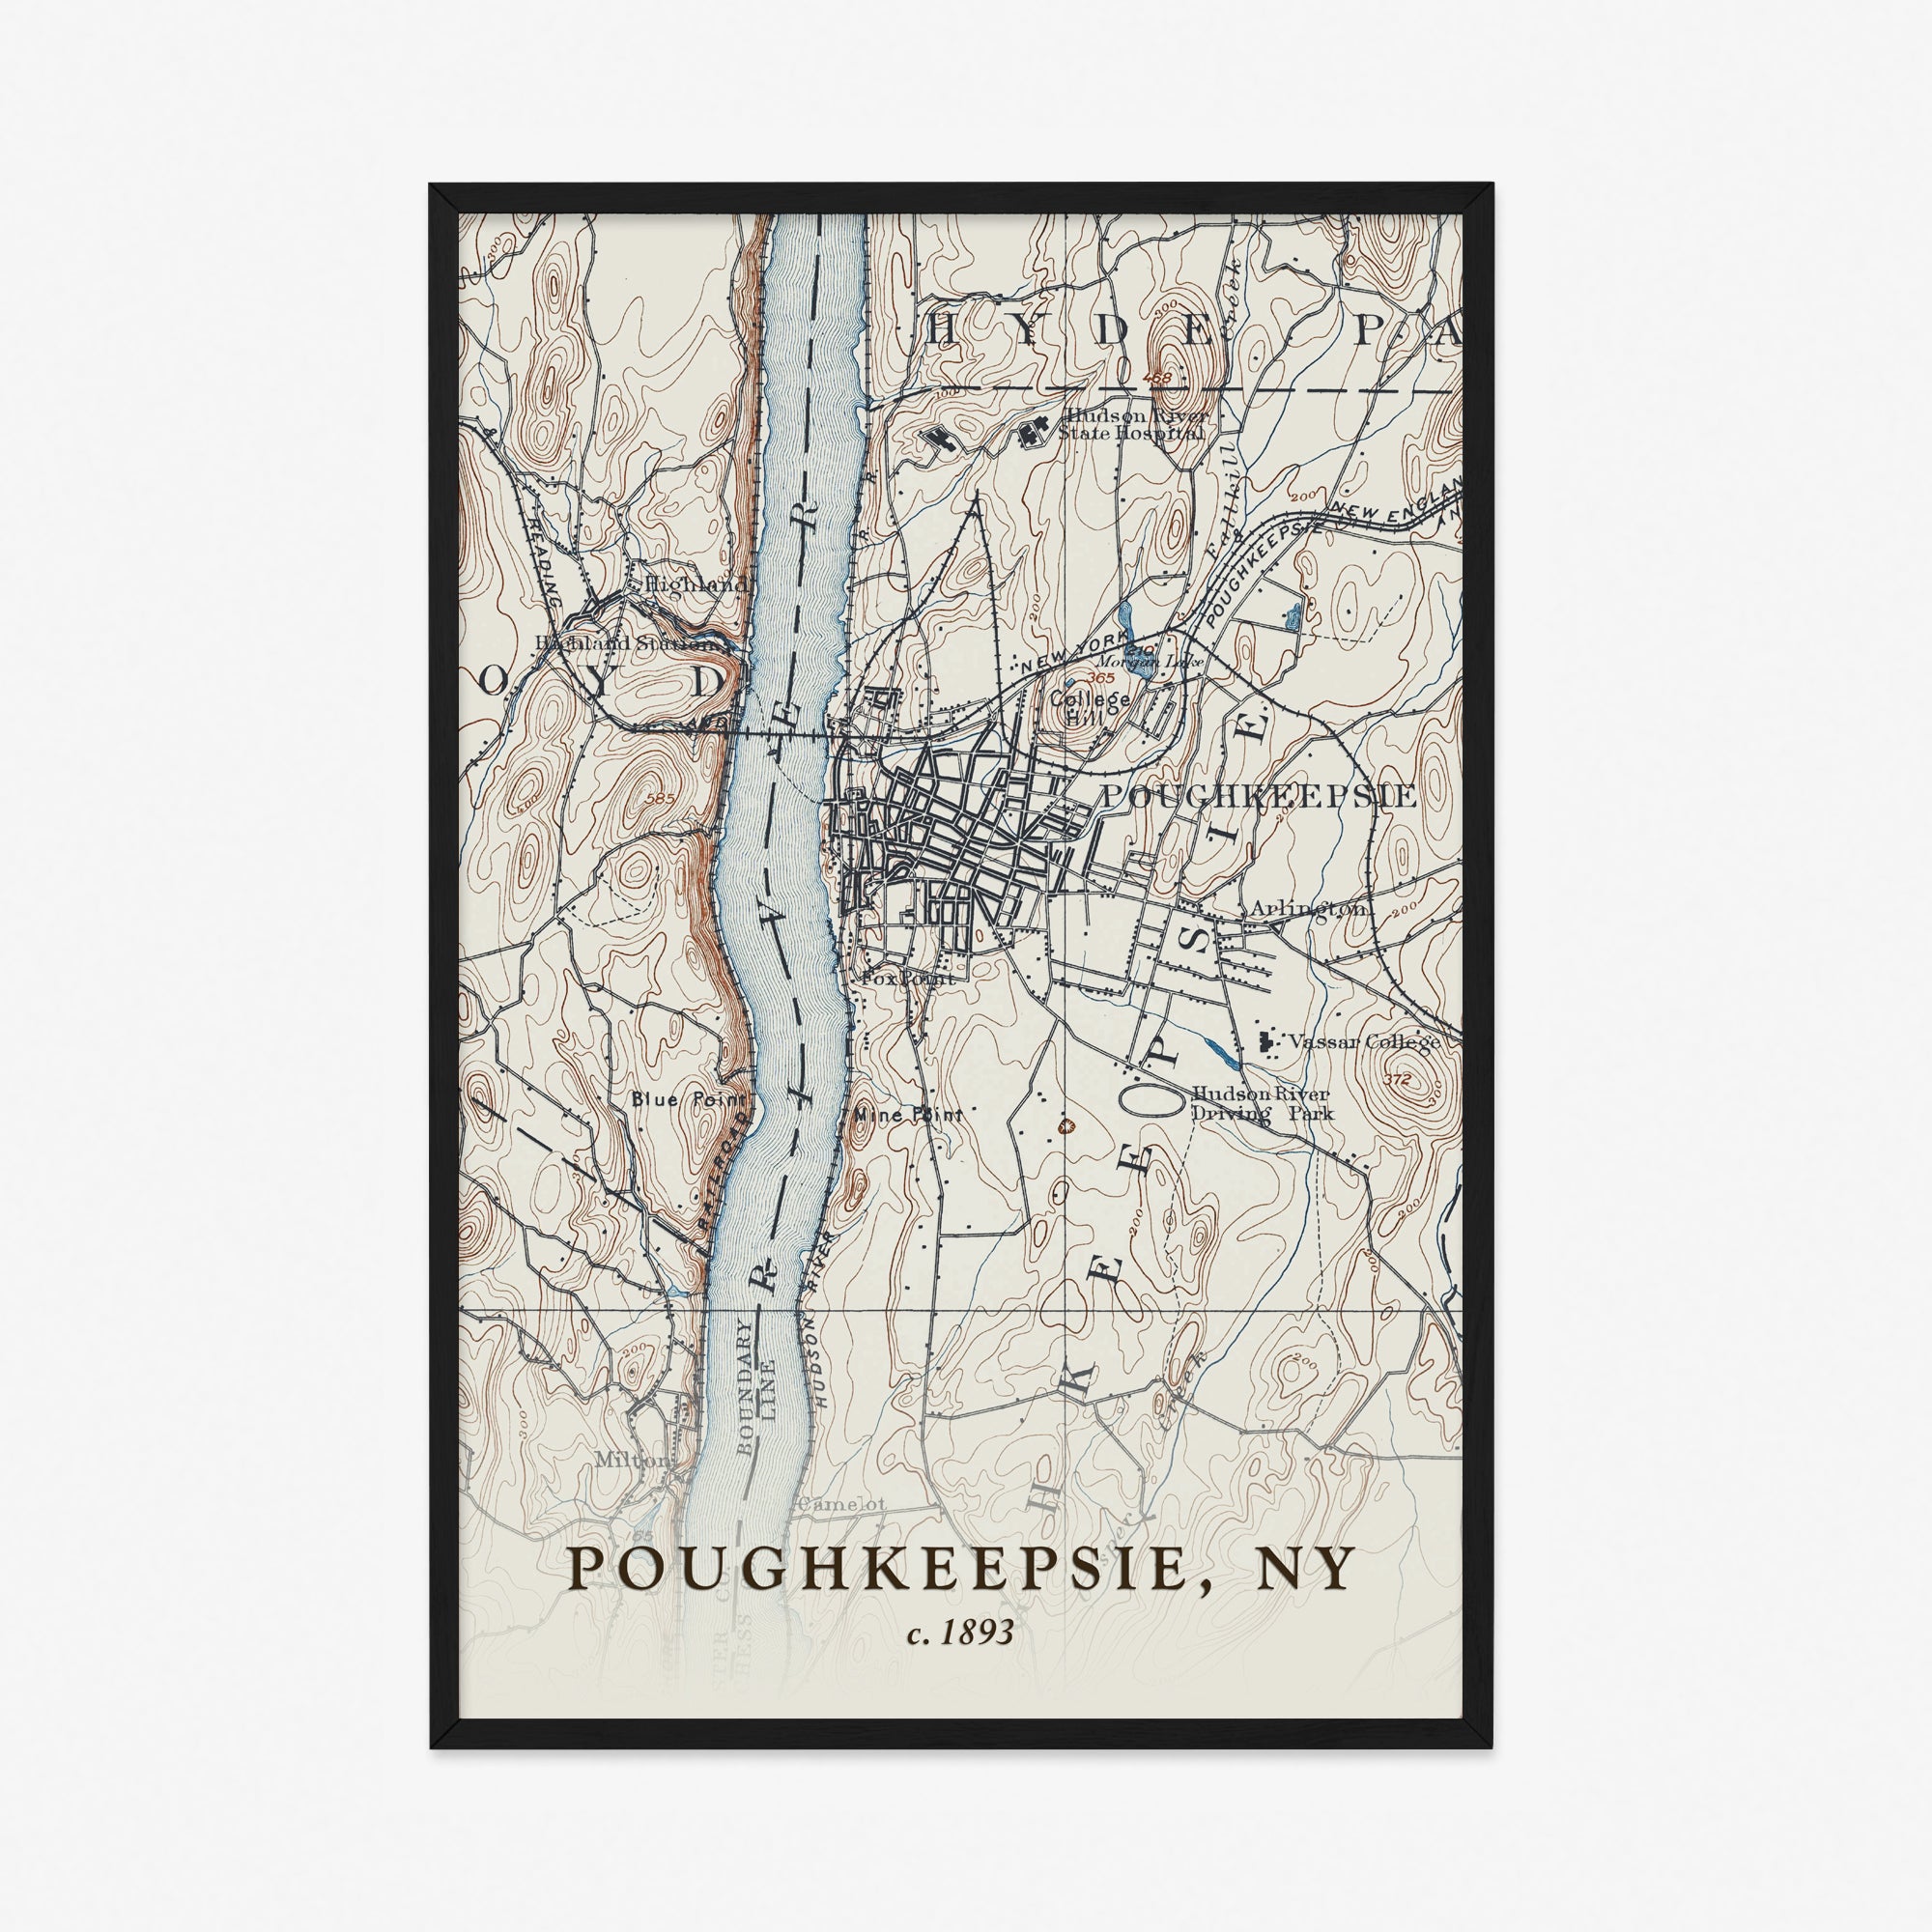 Poughkeepsie, NY - 1893 Topographic Map